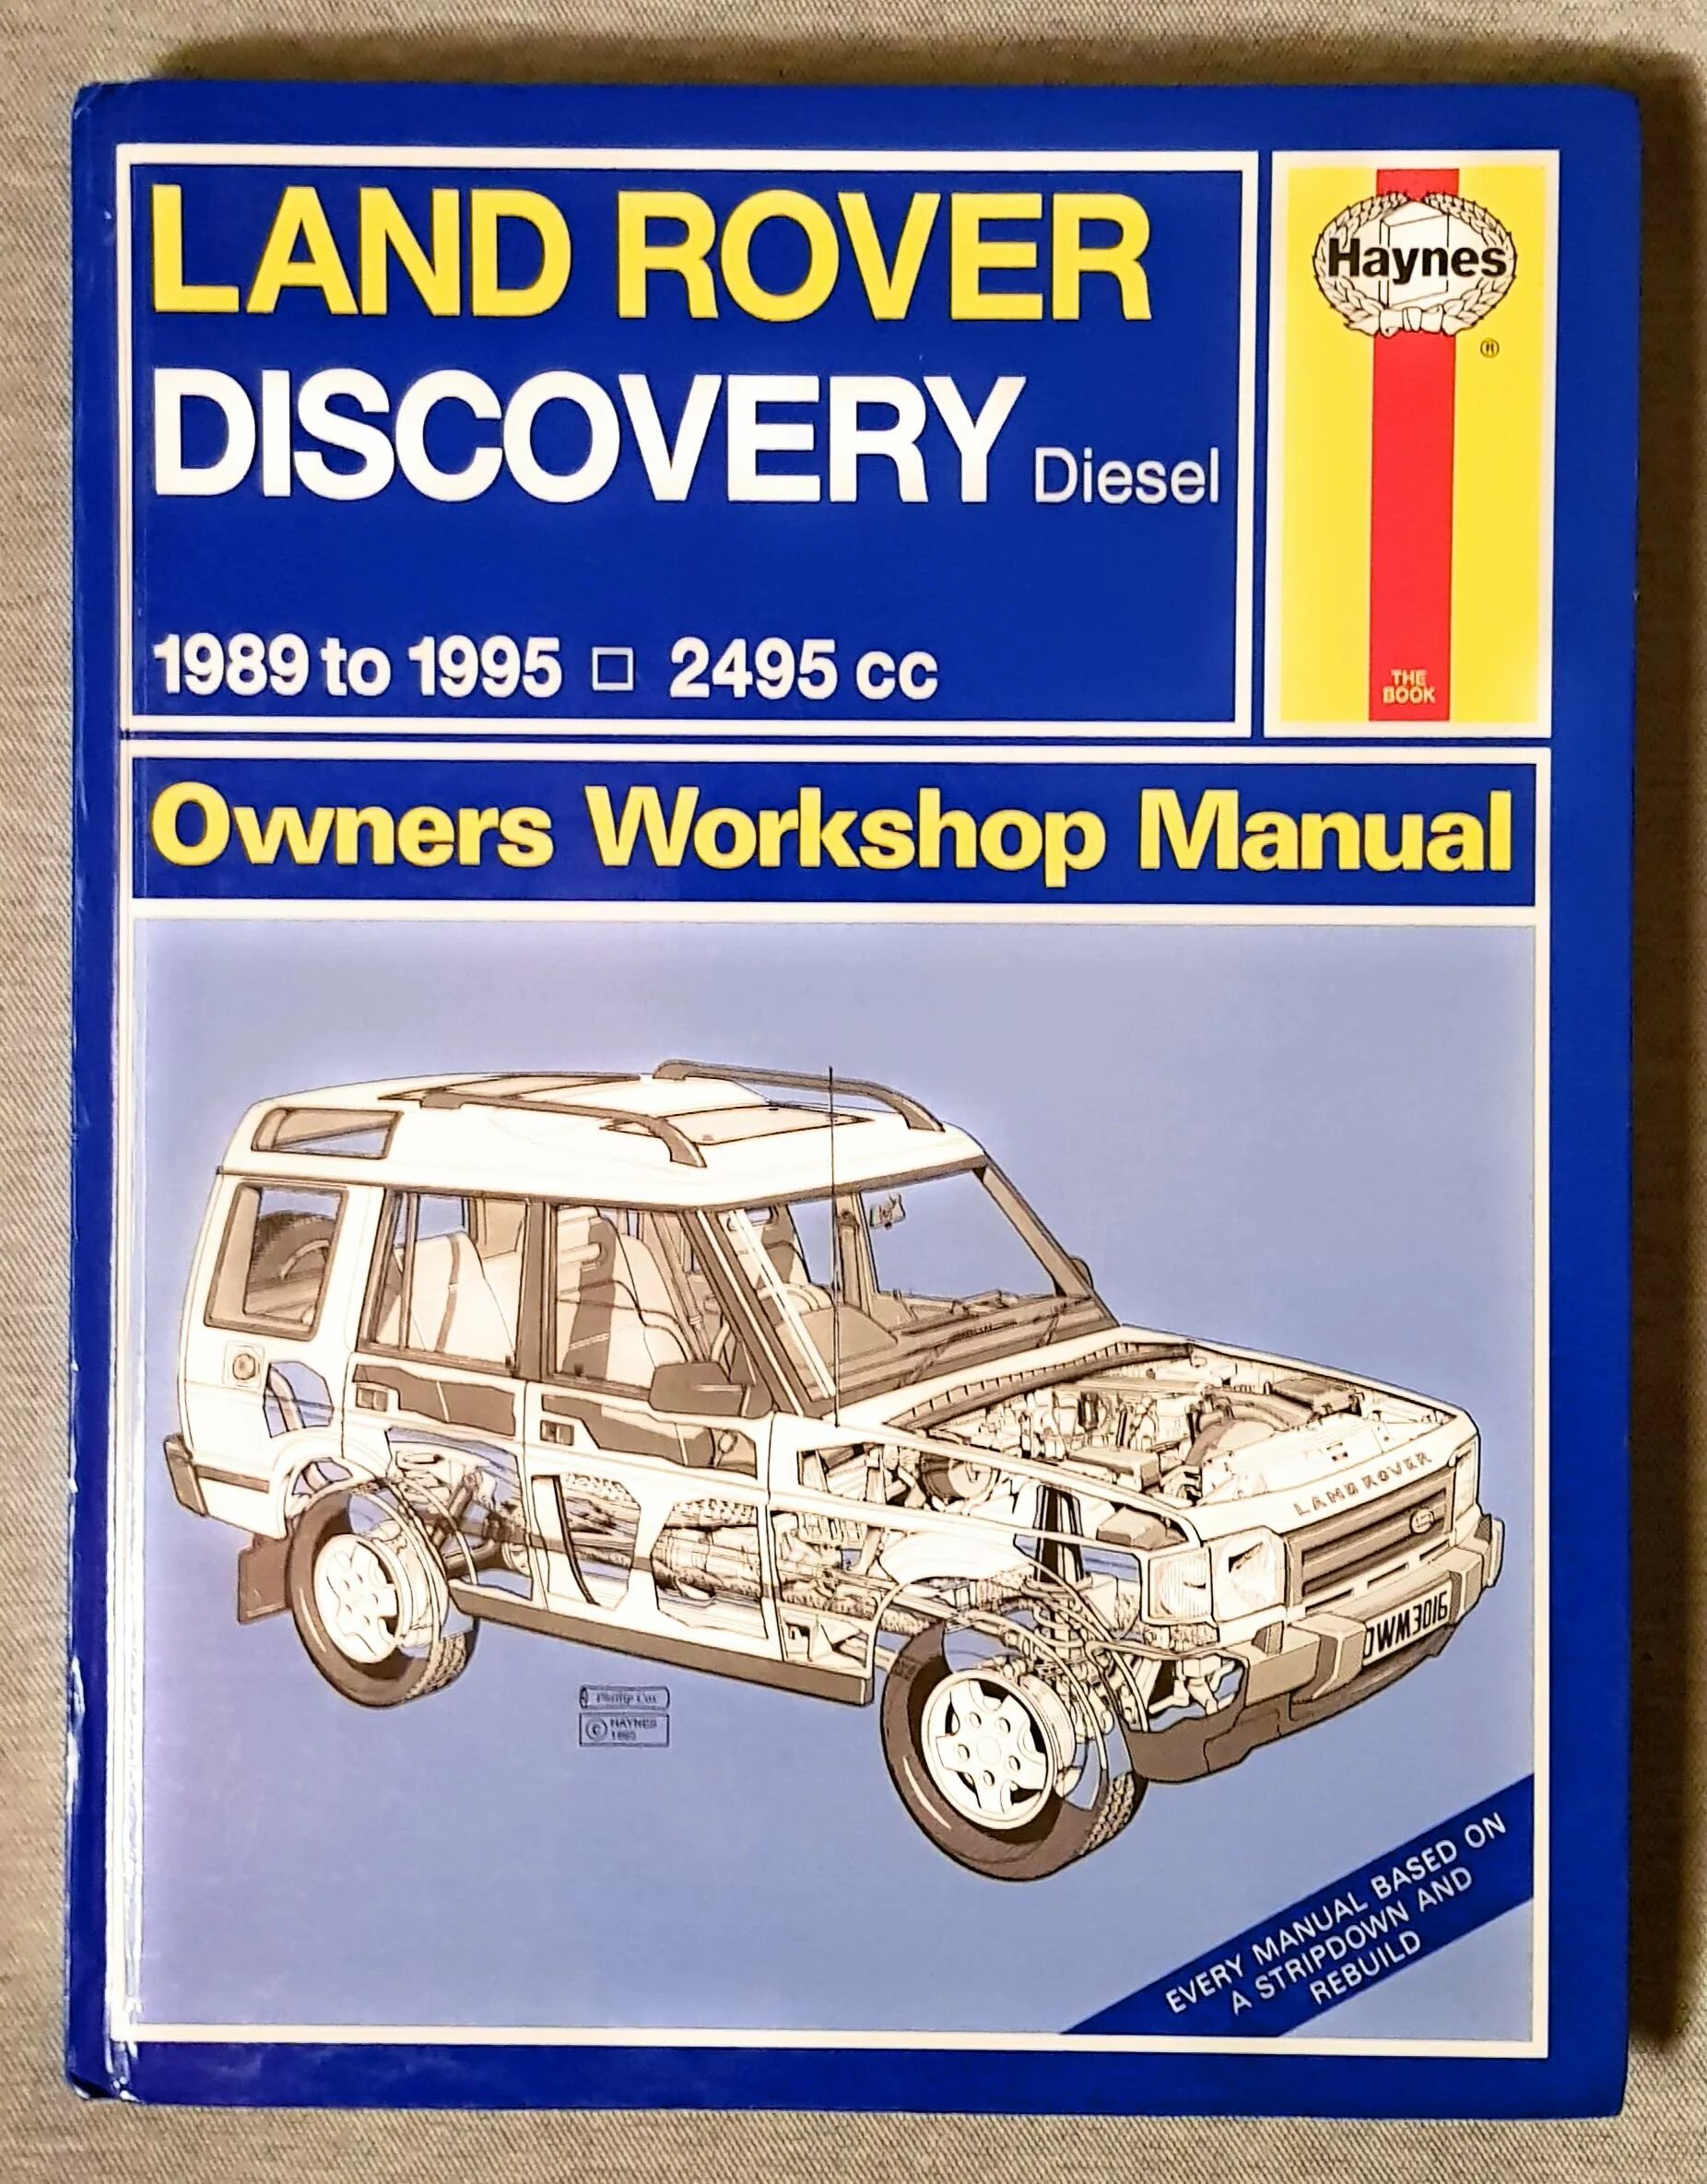 Land Rover Discovery 2 2004 мануал. Мануал Дискавери спорт. Сервис мануал Дискавери 4. Инструкция по эксплуатации Дискавери 3 2.7 дизель. Дизель дискавери 1